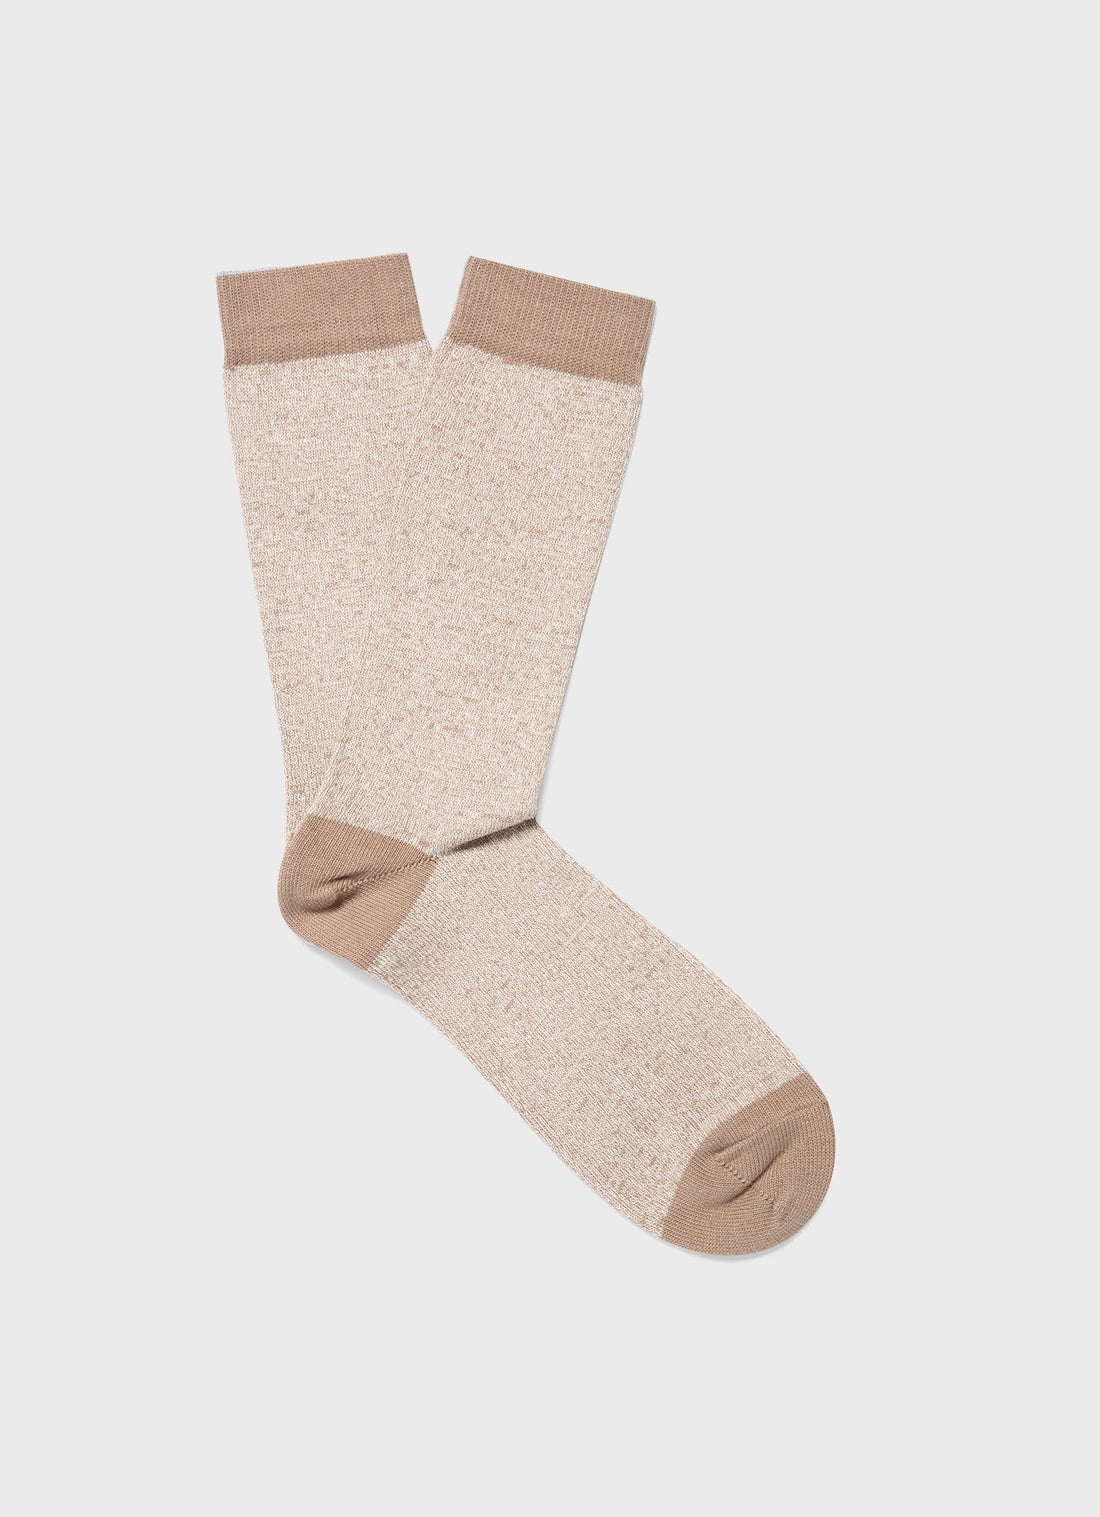 Men's Cotton Socks in Dark Stone/Ecru Twist